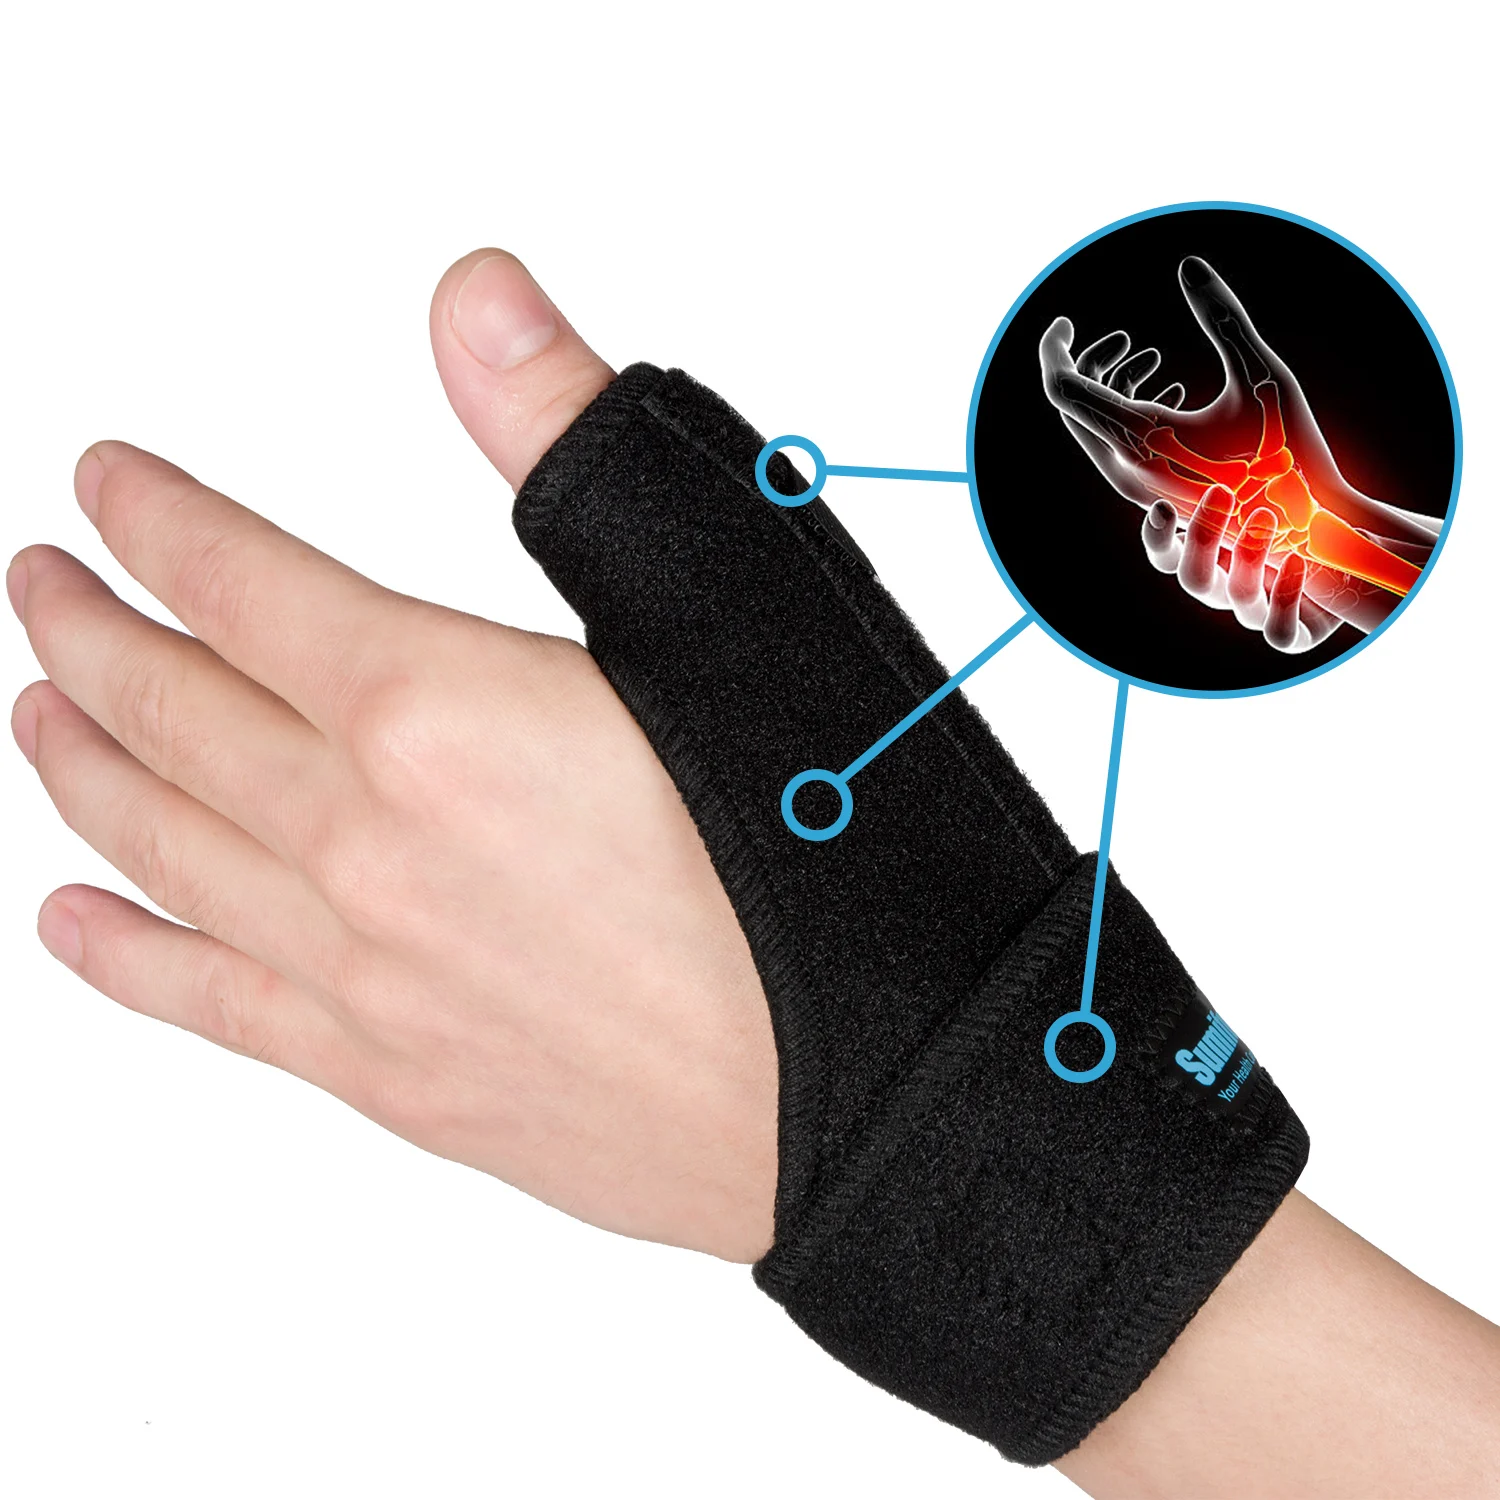 1pcs Hand Protecor Thumb Spica Wrist Brace Splint Support for Arthritis Tendonitis Carpal Tunnel Pain Relief C1572